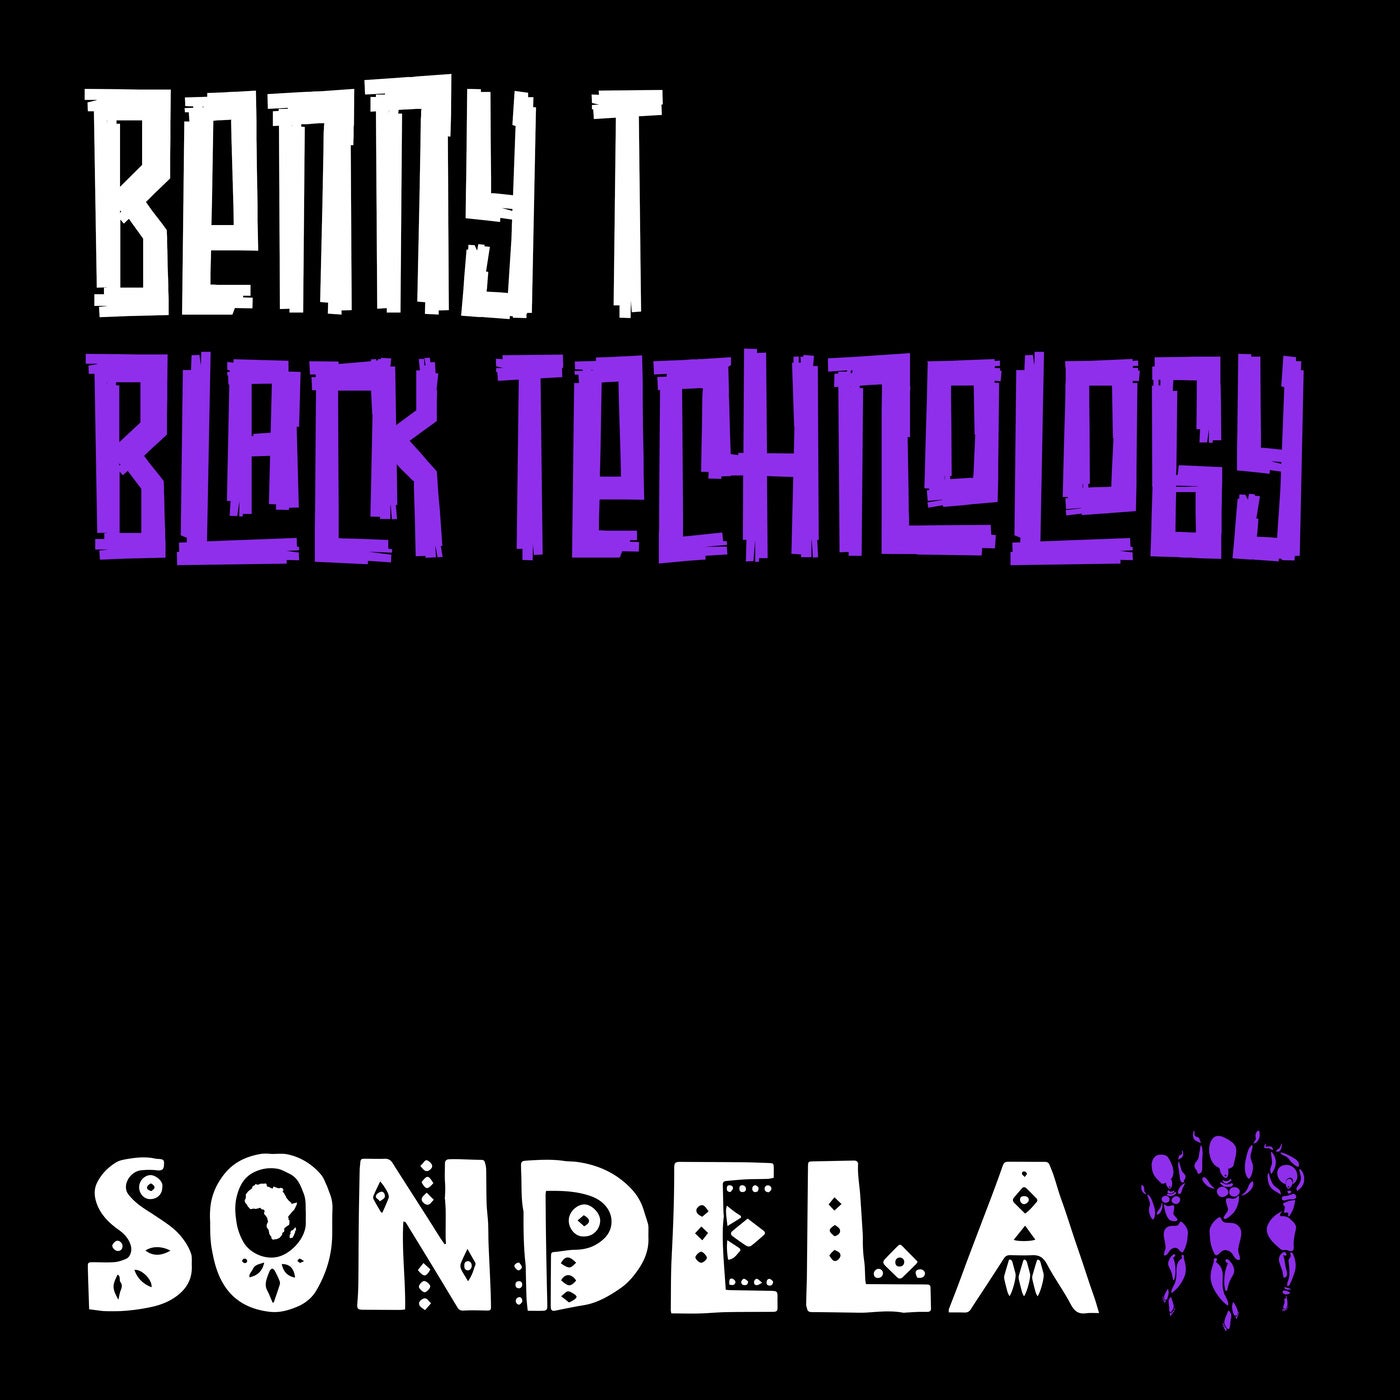 Download Black Technology on Electrobuzz